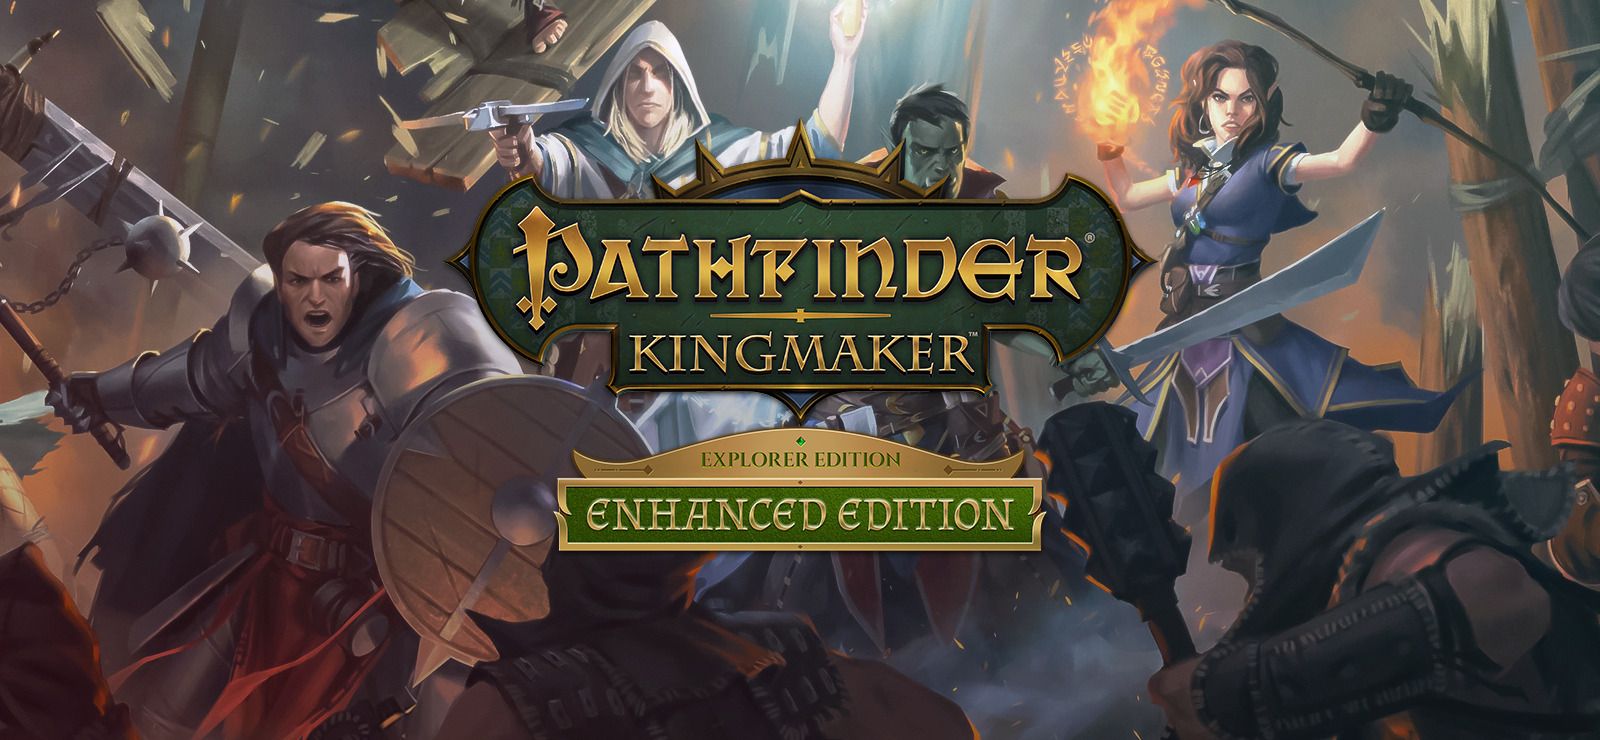 Pathfinder: Kingmaker Plus Edition on GOG.com